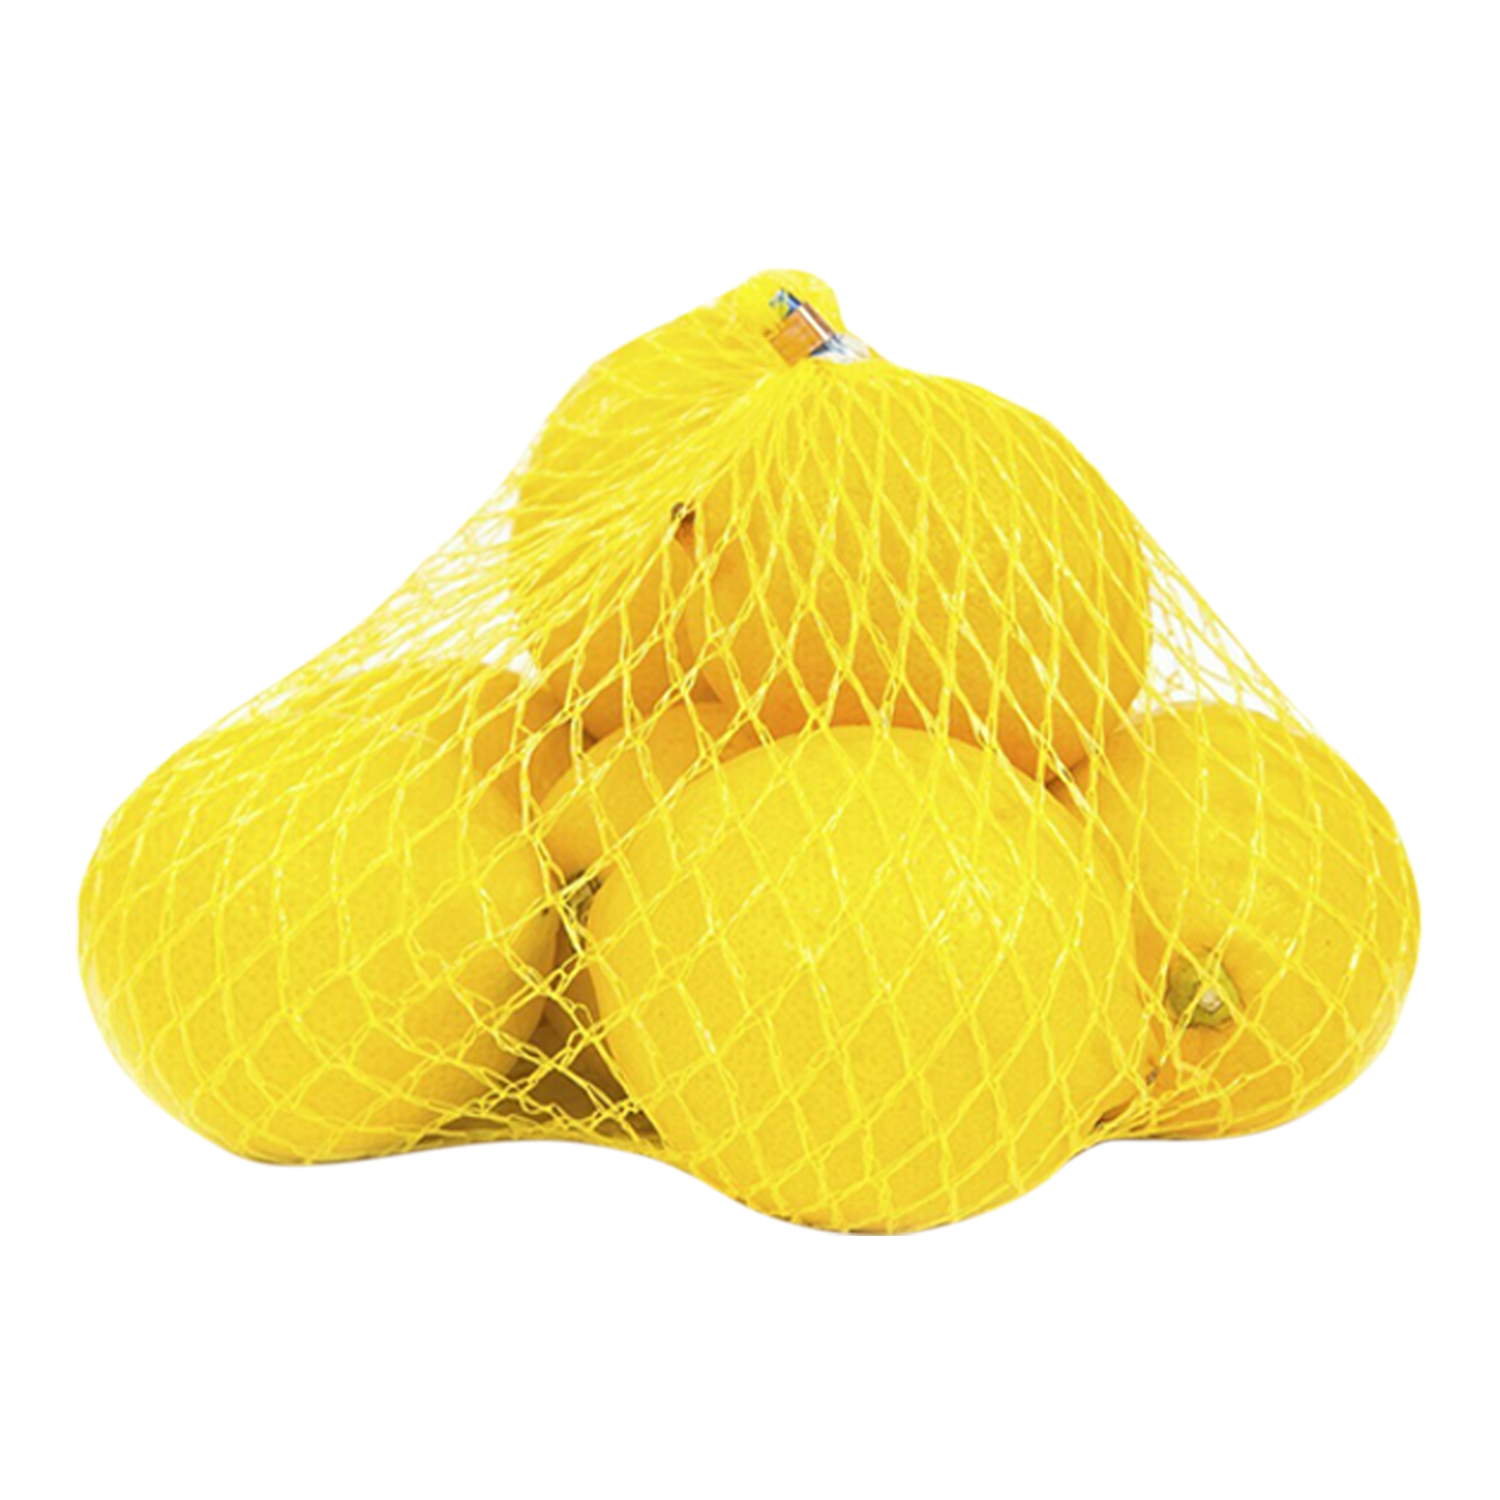 Ç-Limon File